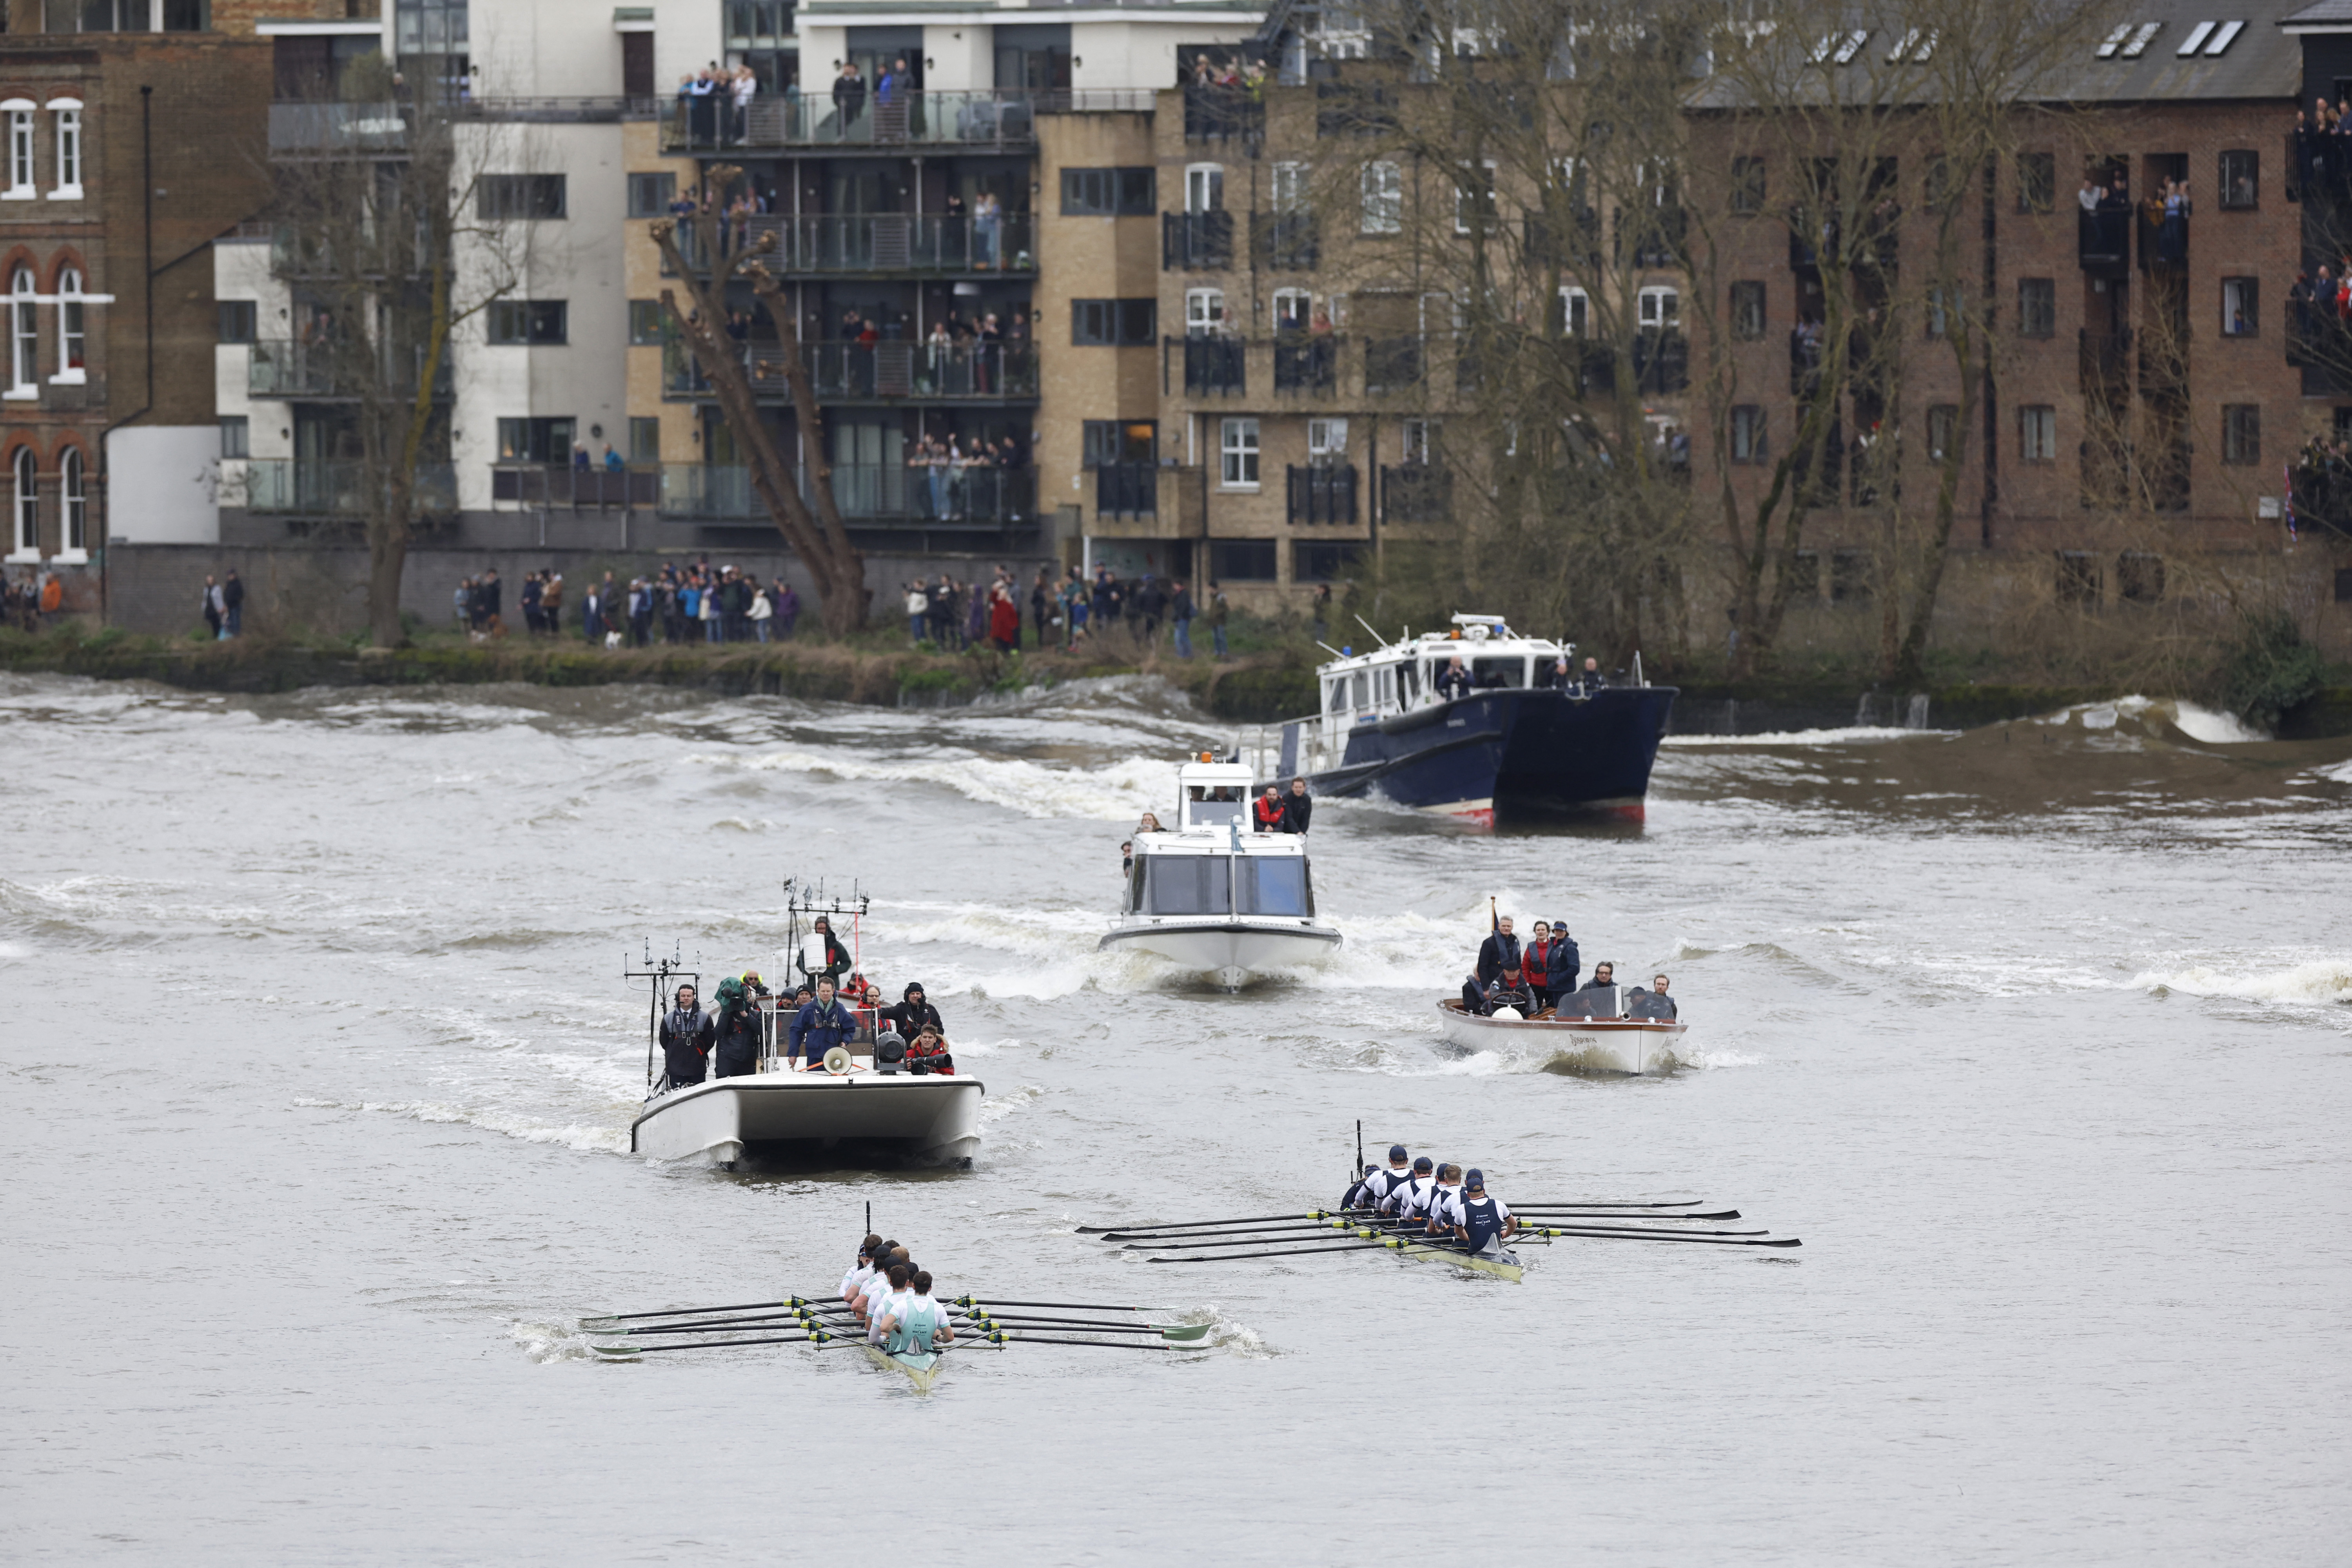 University Boat Race - Oxford v Cambridge